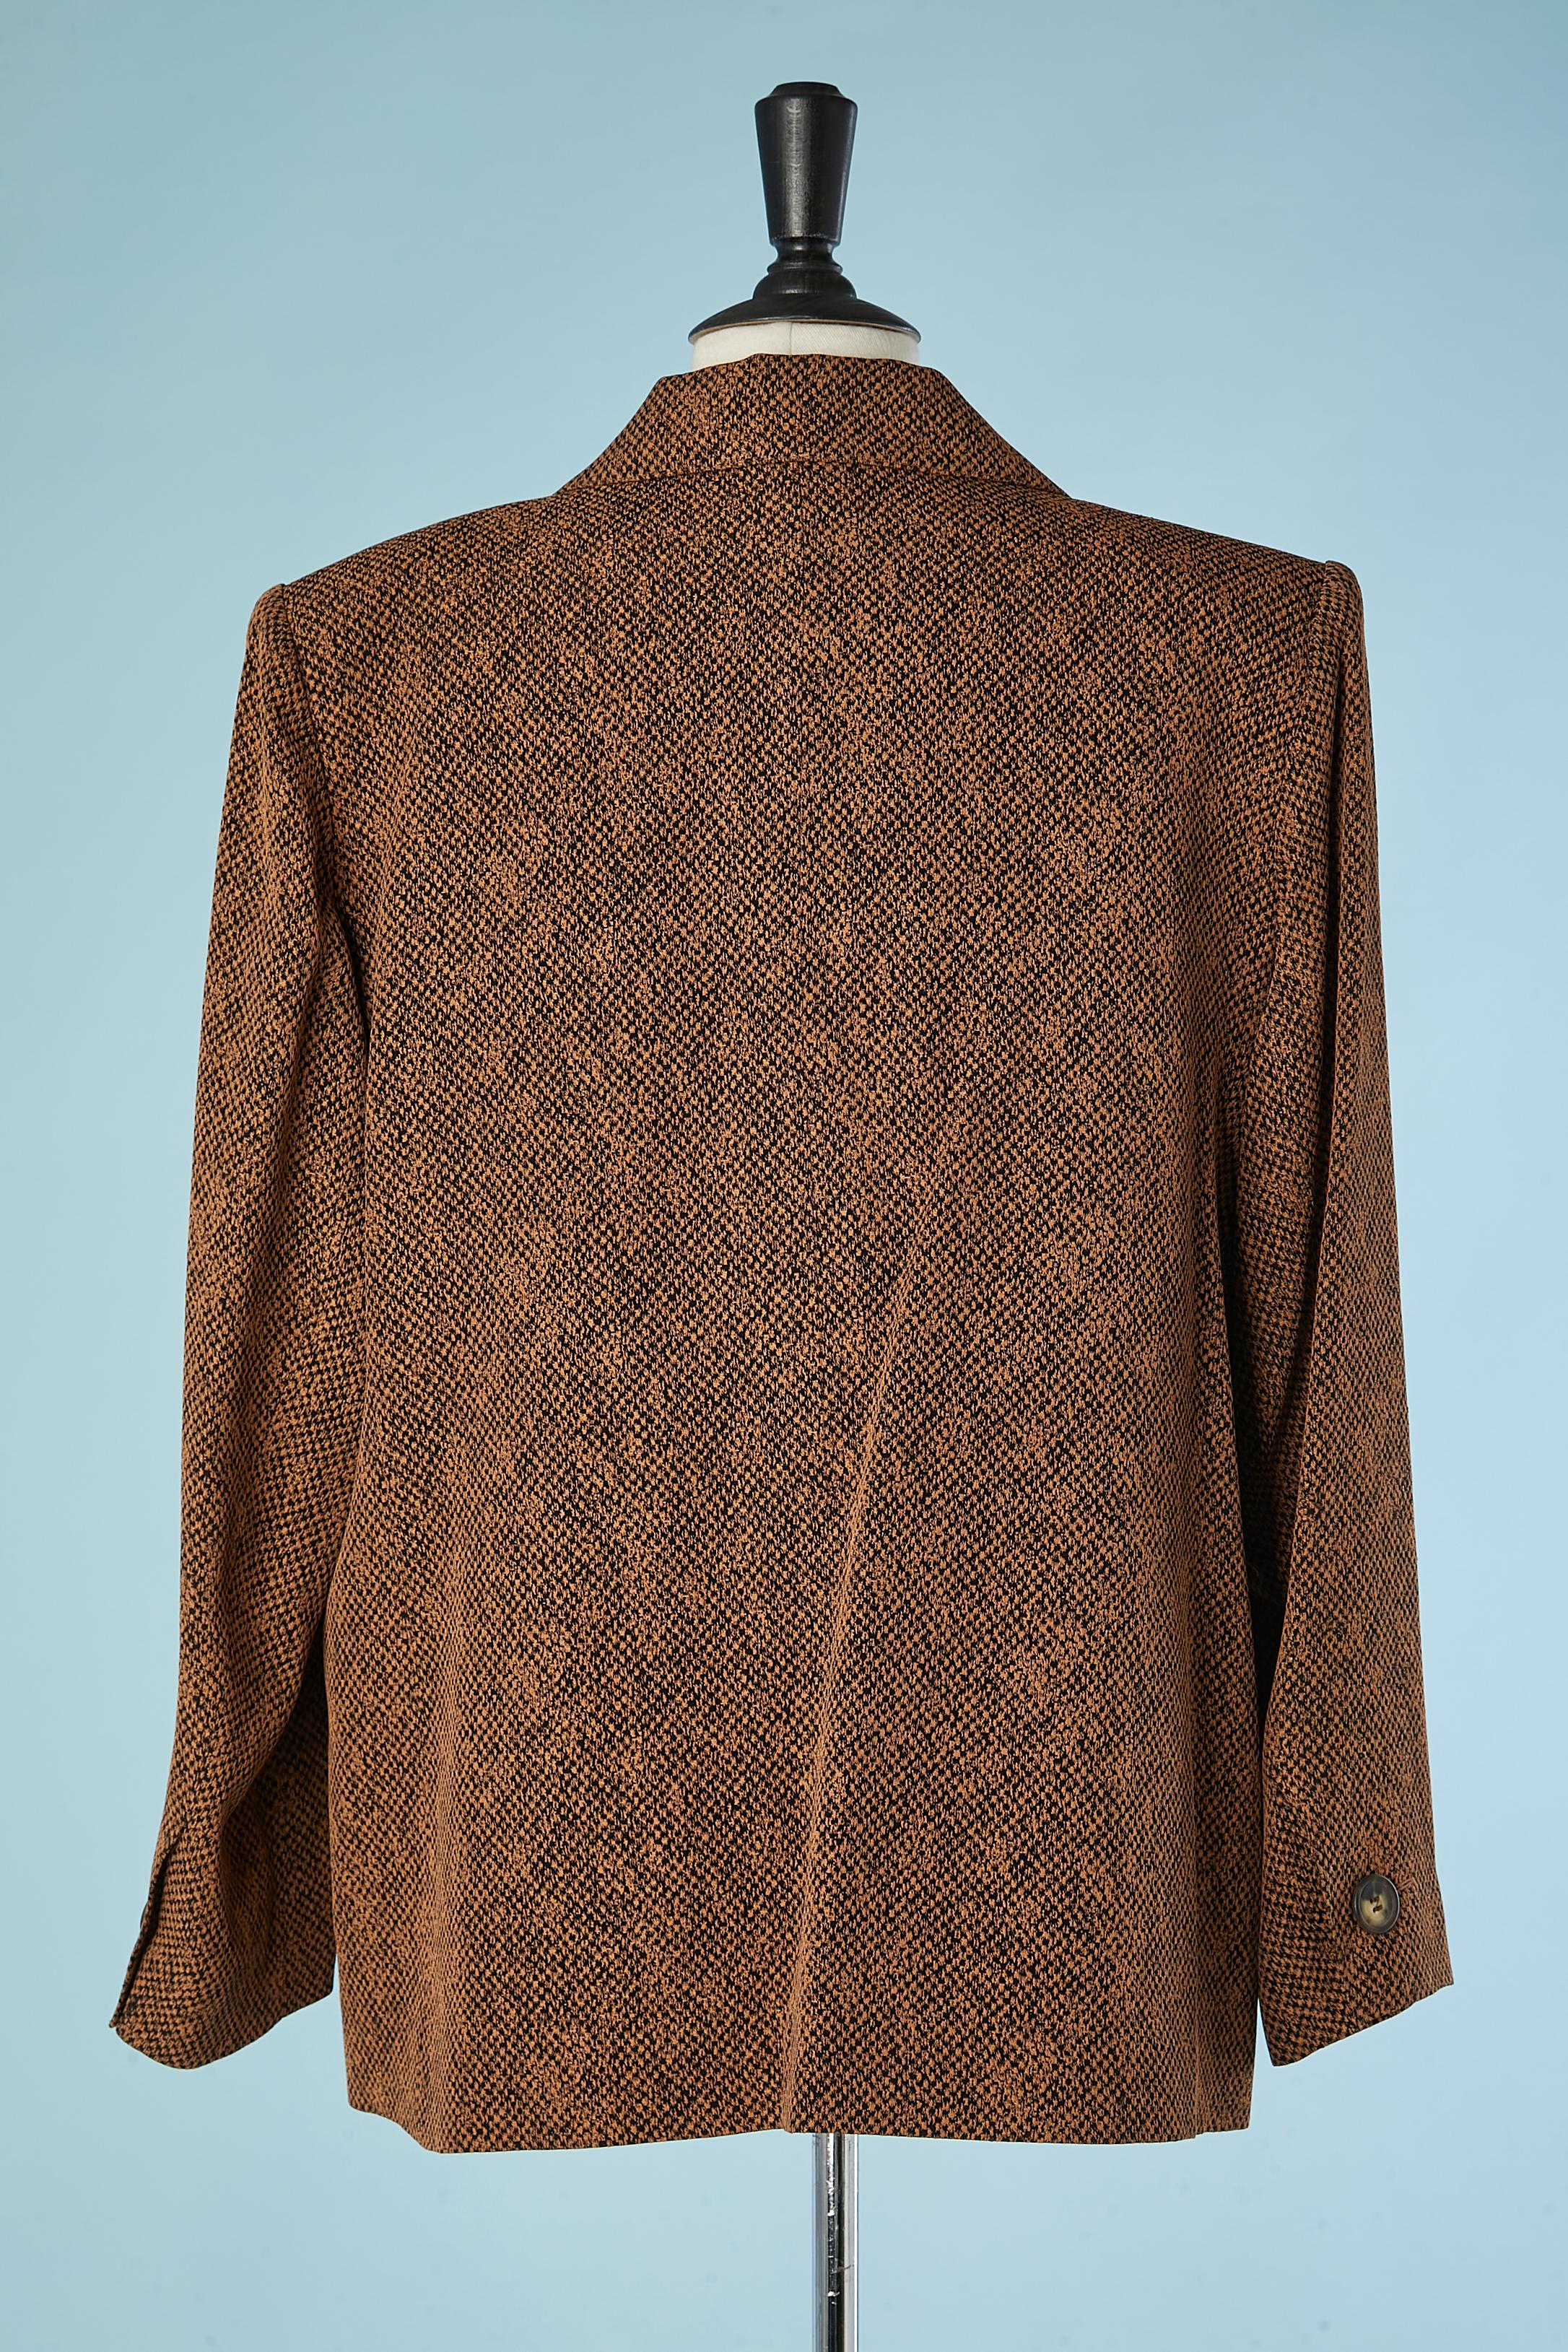 Brown and black jacquard single breasted jacket Yves Saint Laurent Variation  For Sale 1